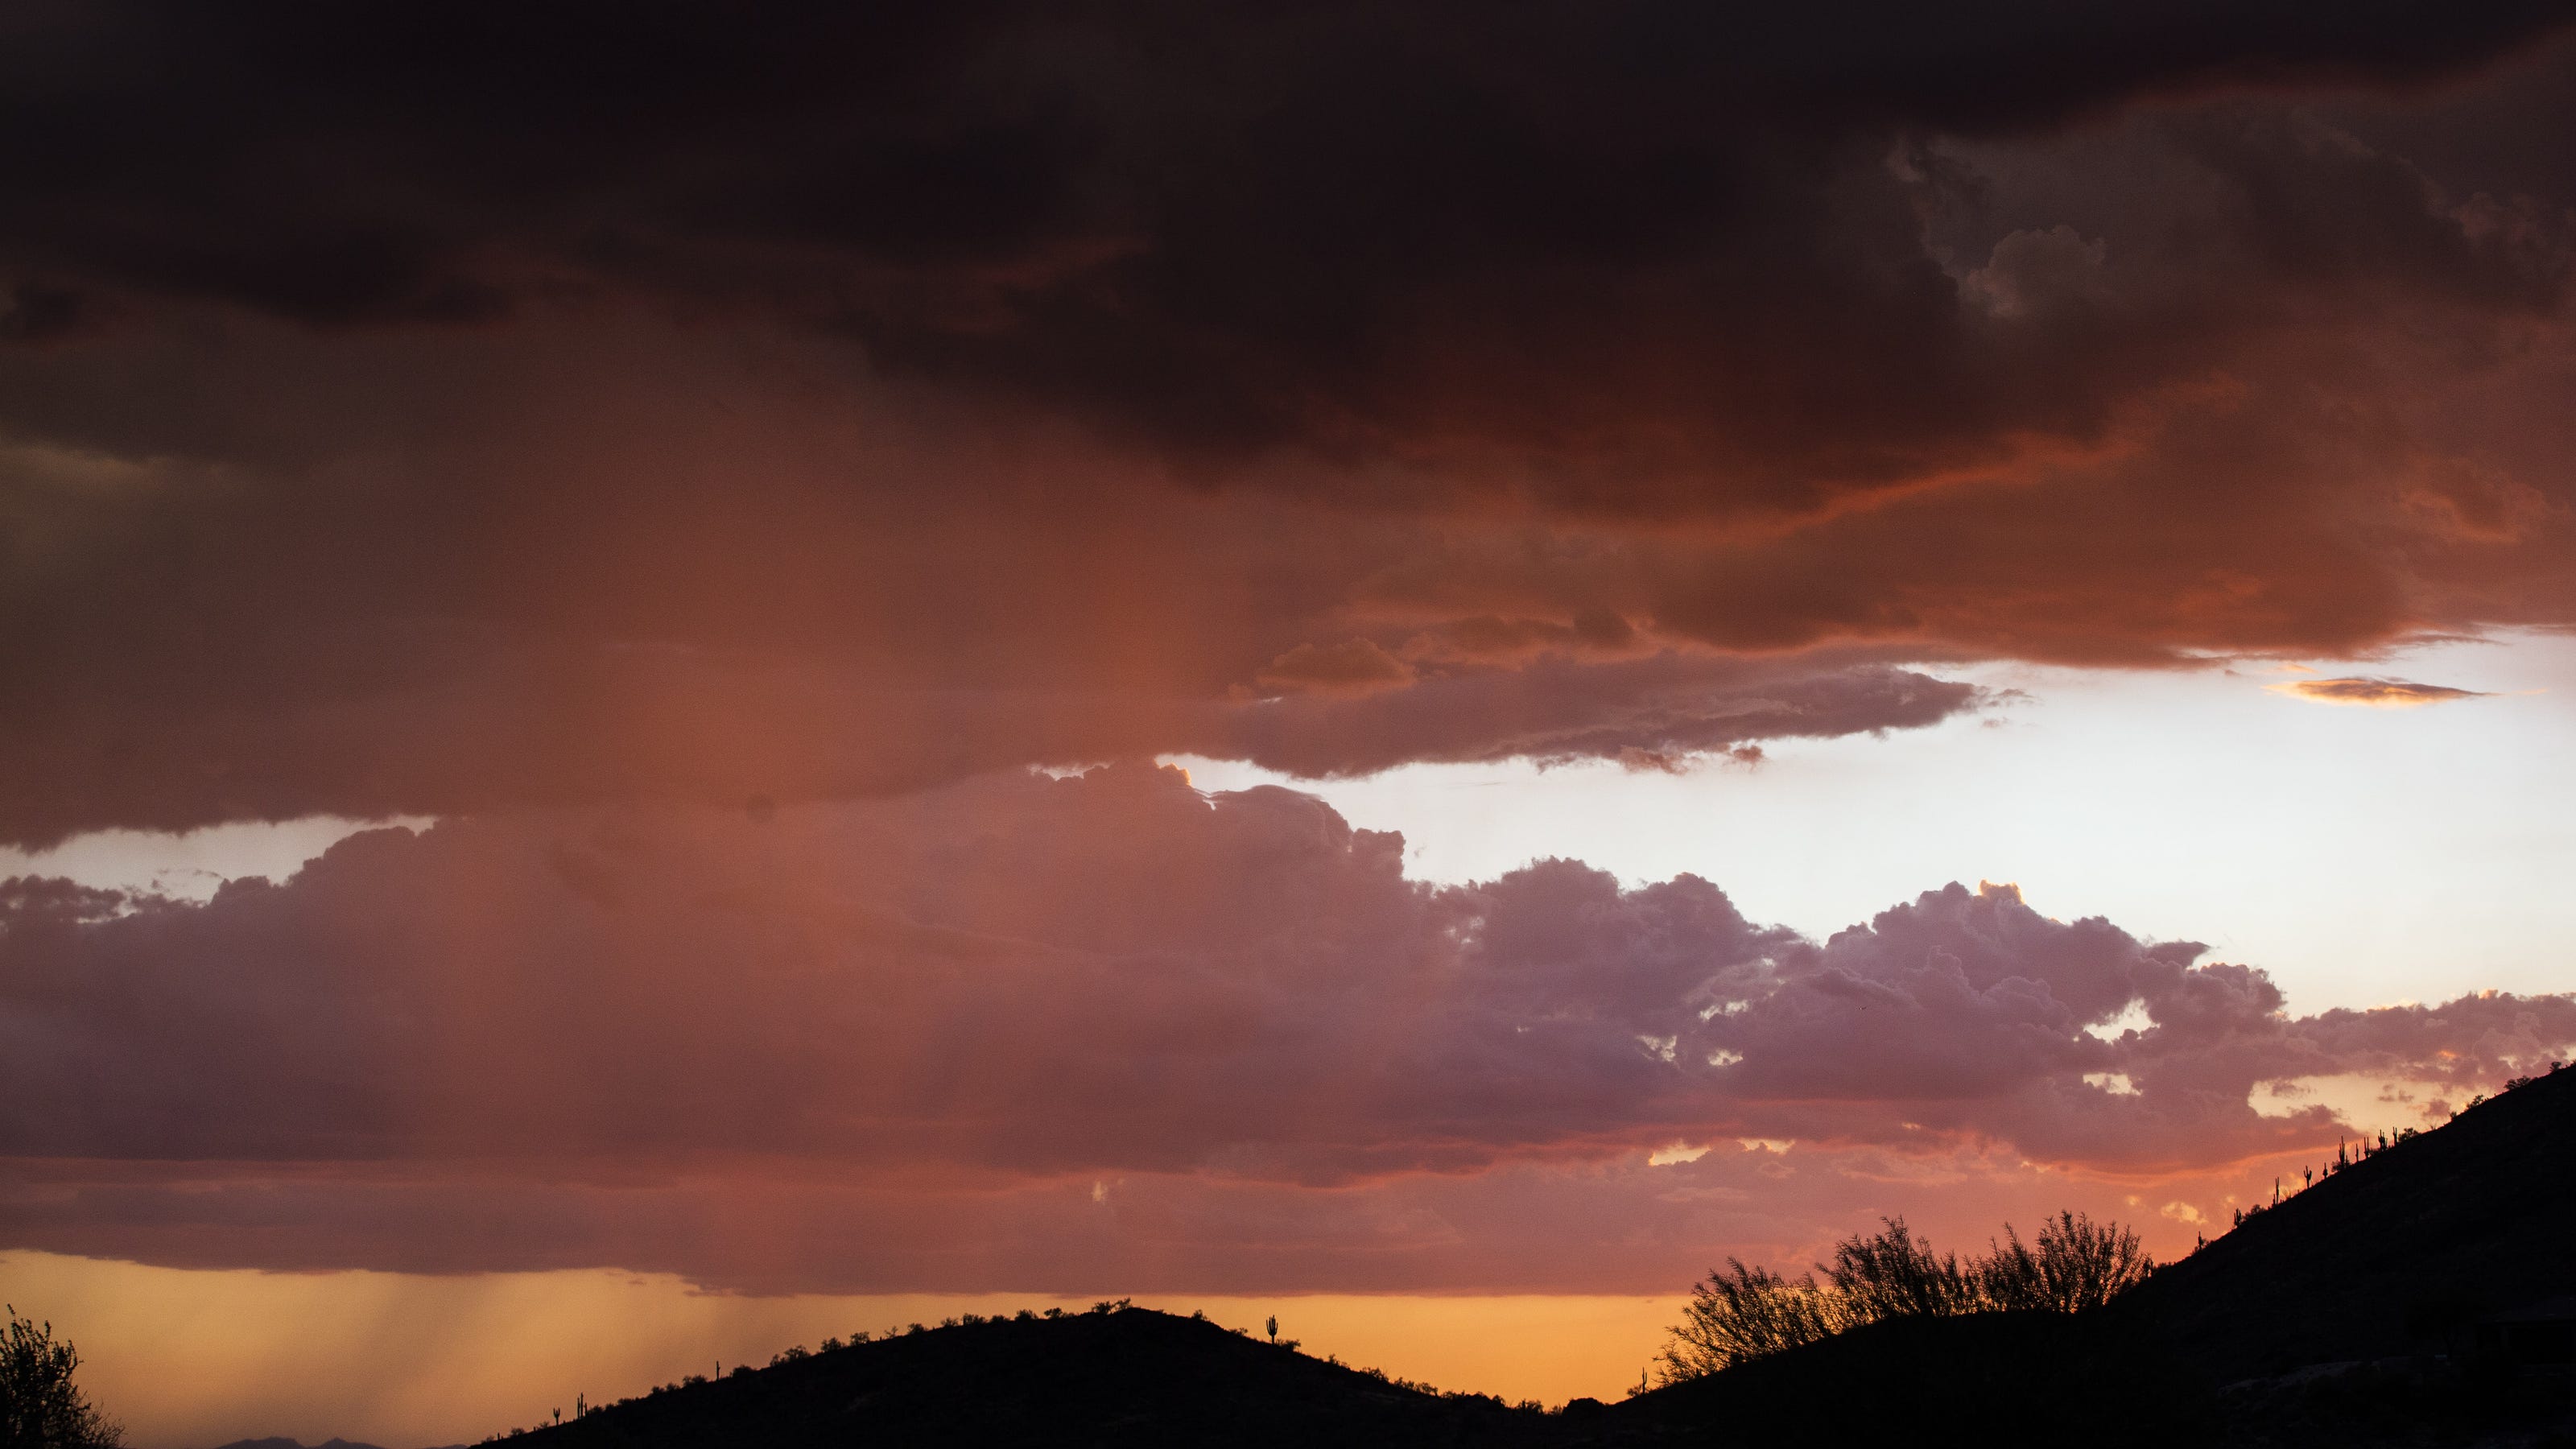 Arizona's monsoon season driest on record